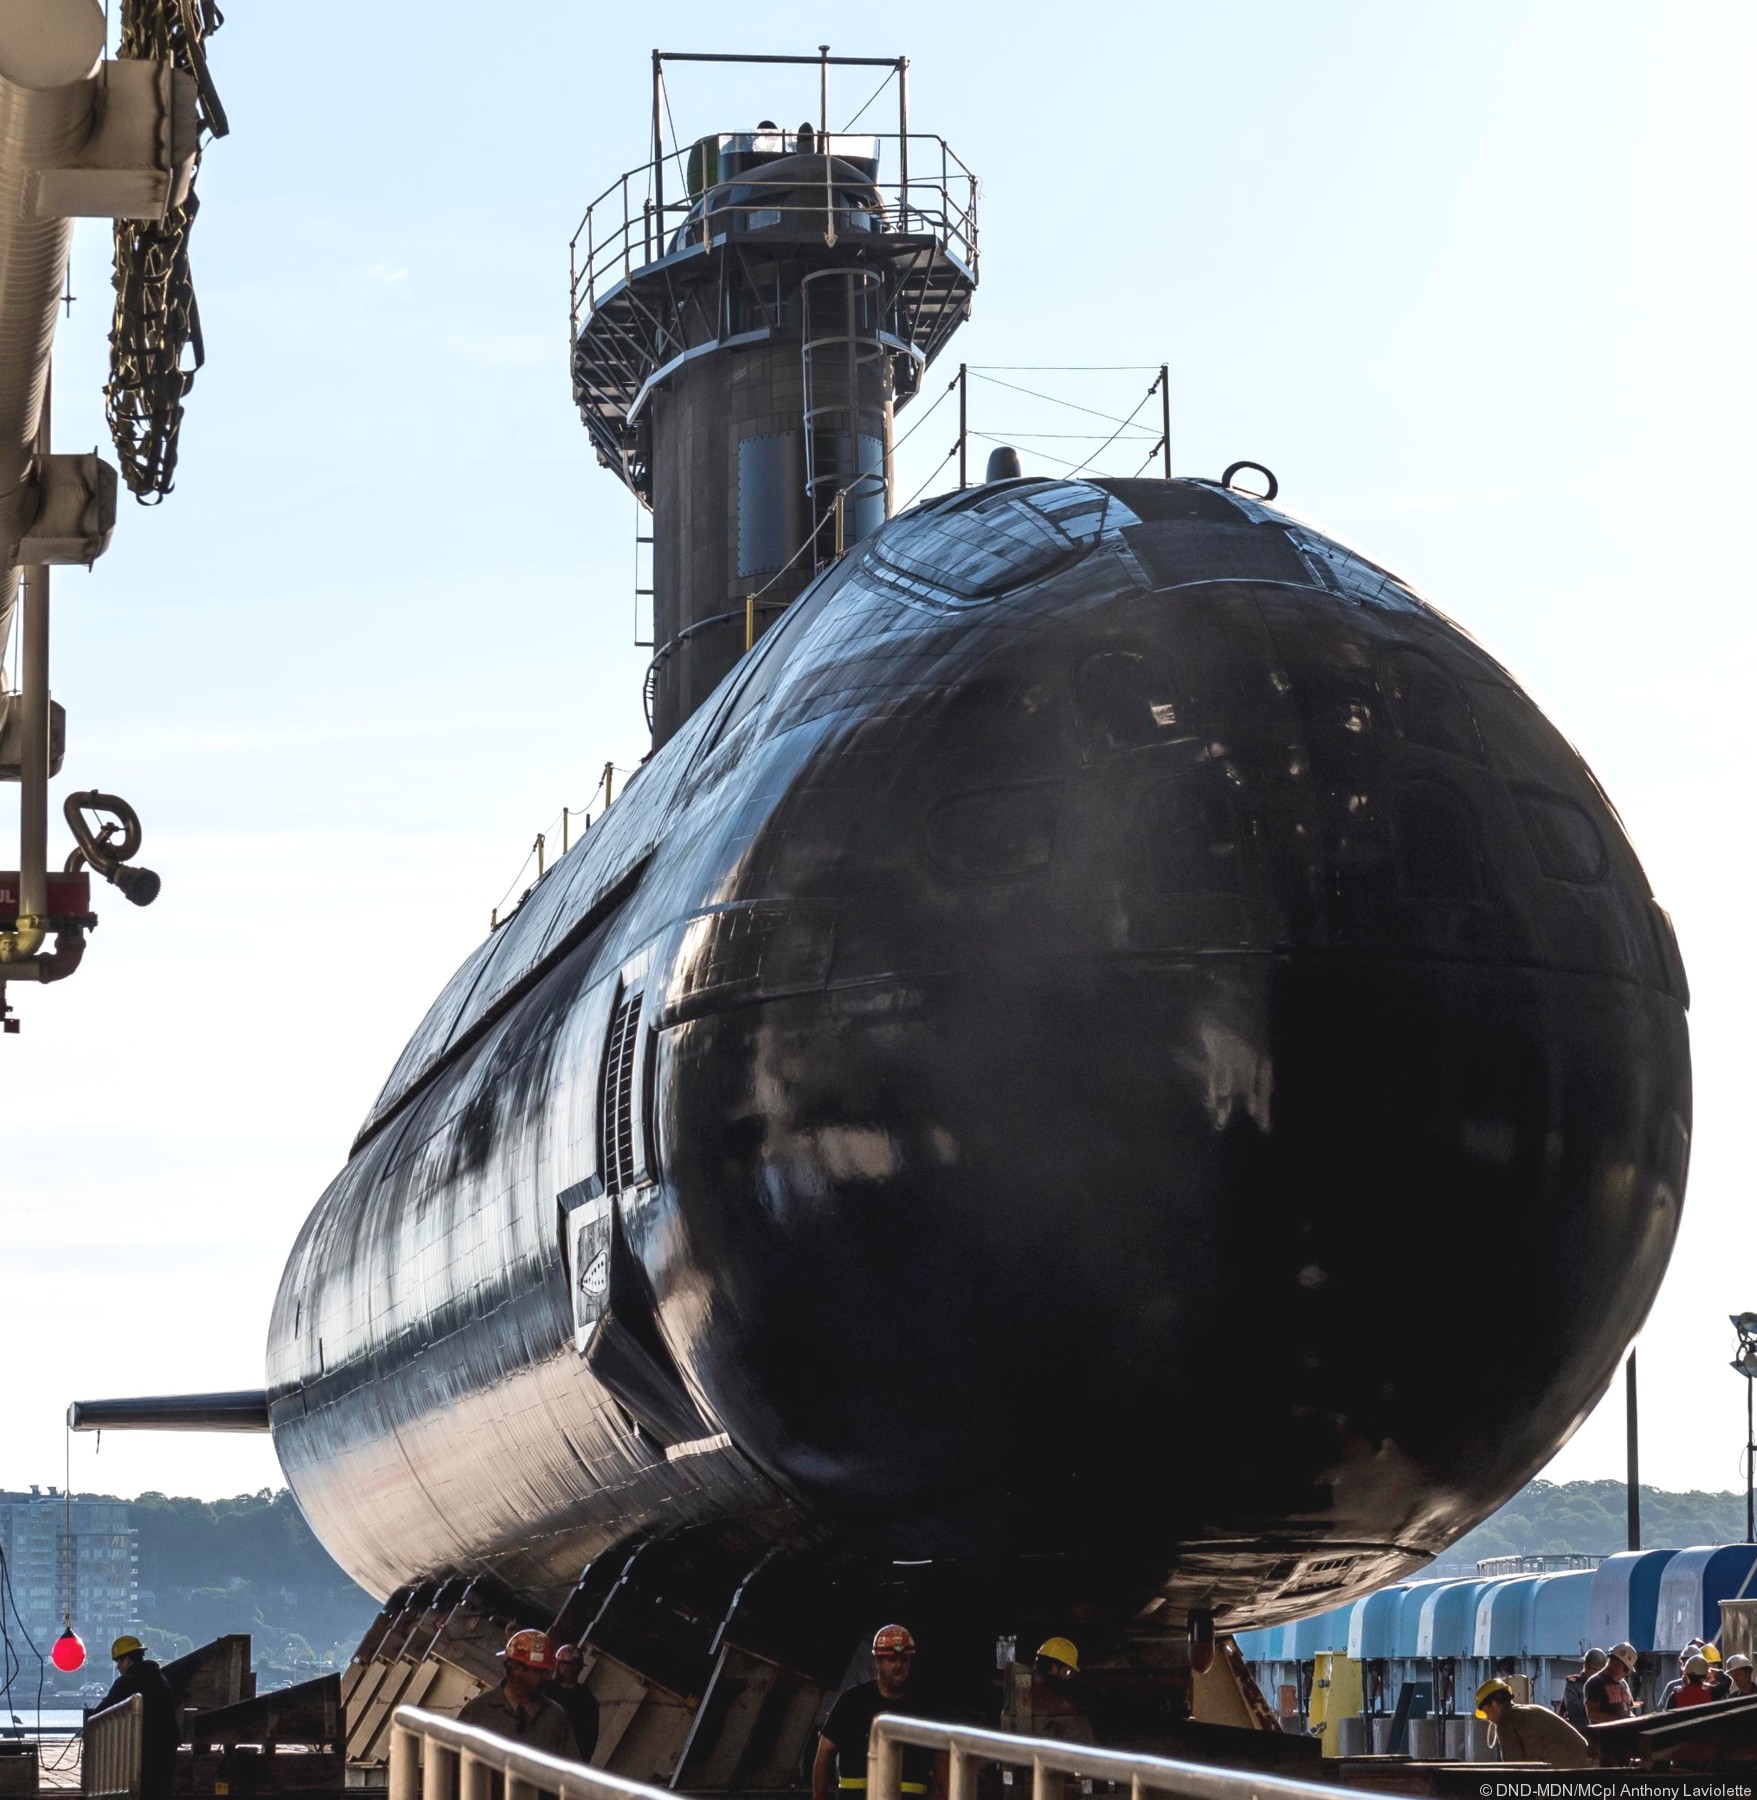 ssk-877 hmcs windsor victoria upholder class attack submarine hunter killer ncsm royal canadian navy 14